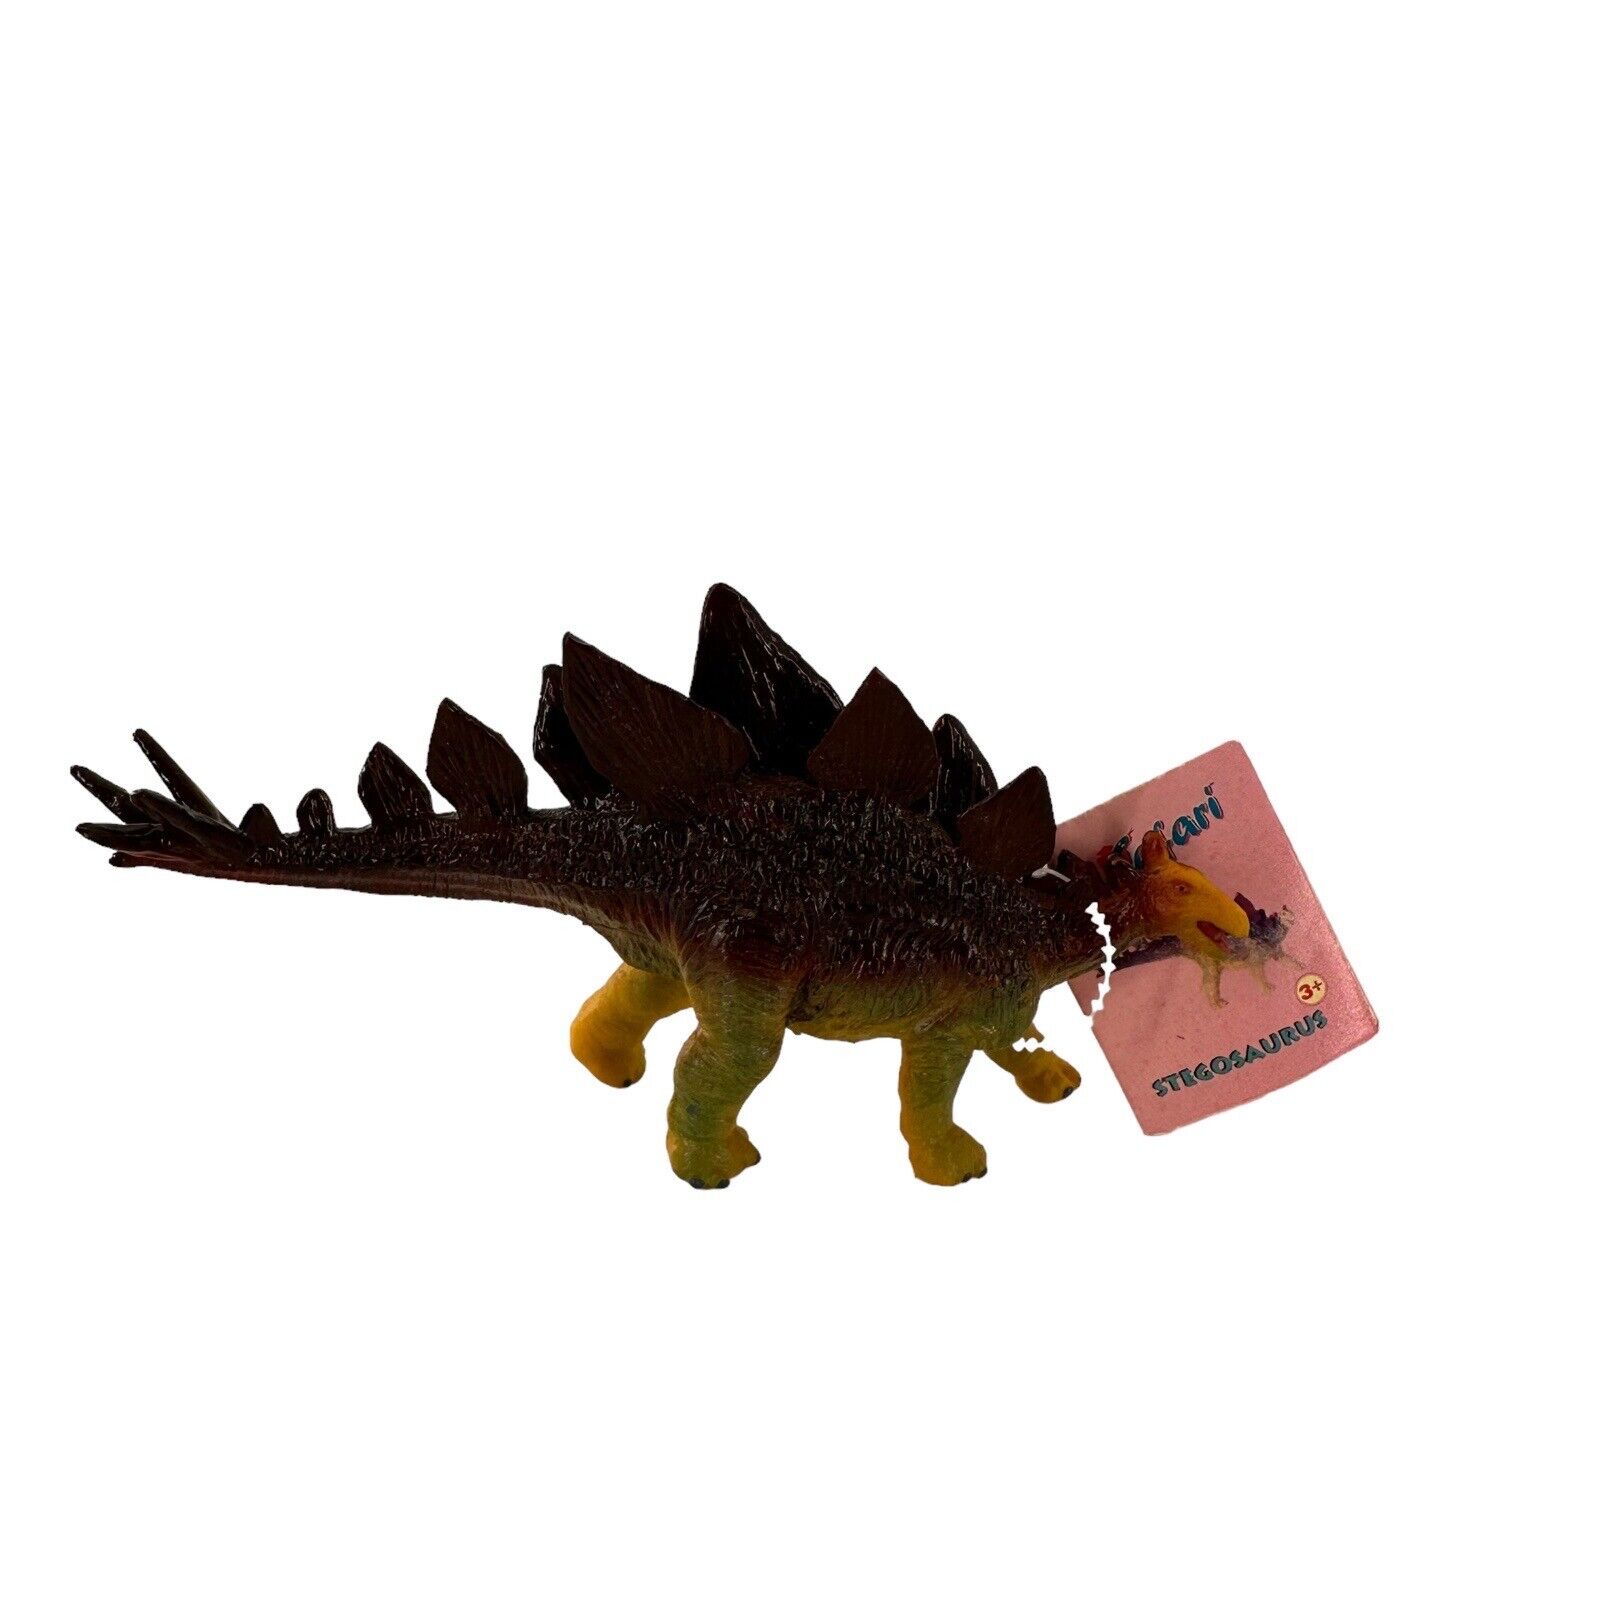 Safari Ltd Stegosaurus Dinosaur Figure 1988 Wild Jurassic Figurine Toy Vtg Green